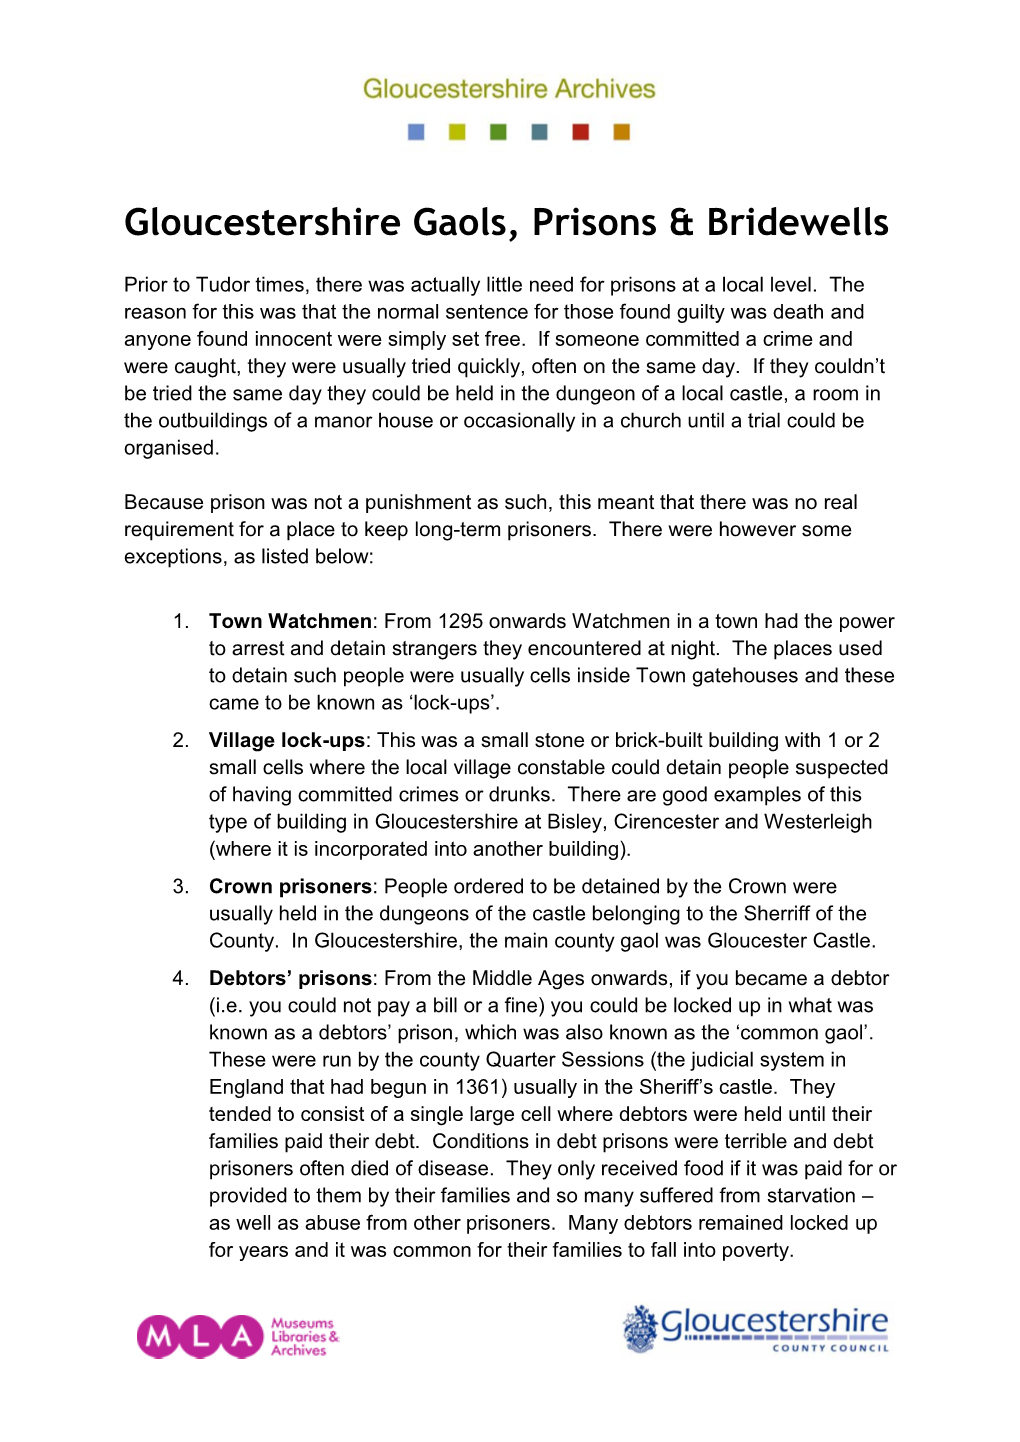 Gloucestershire Gaols, Prisons & Bridewells